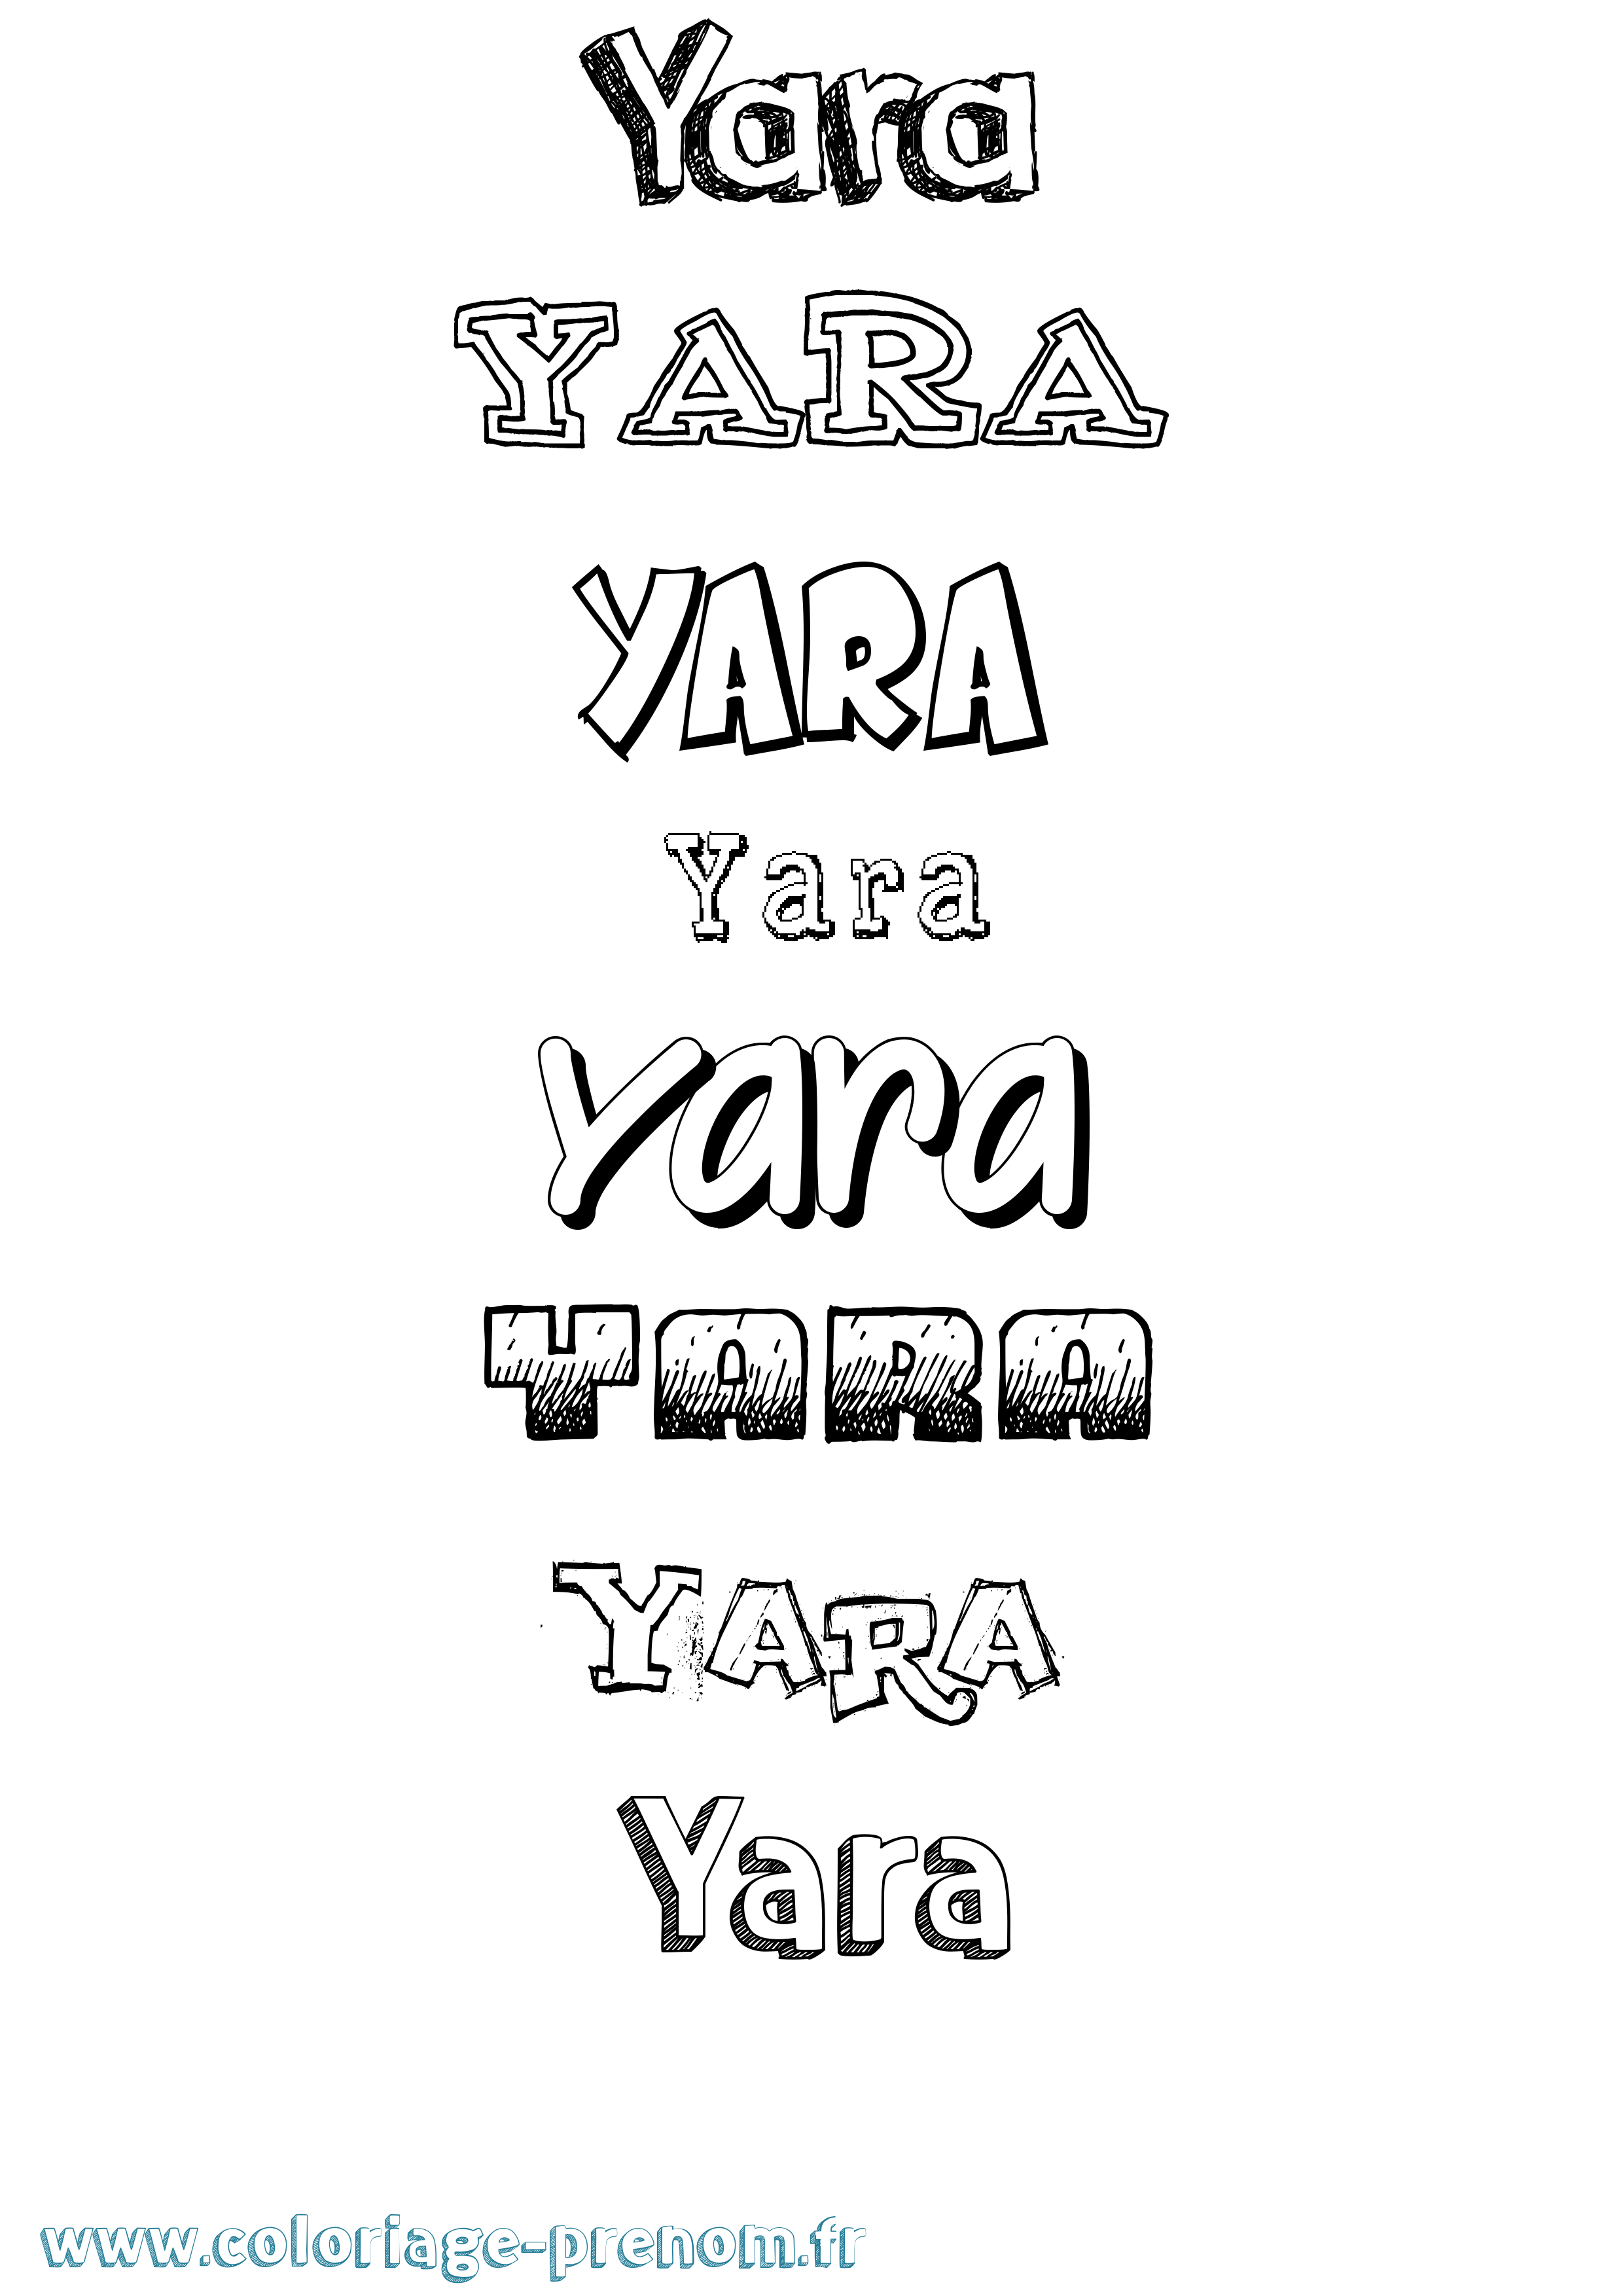 Coloriage prénom Yara Dessiné